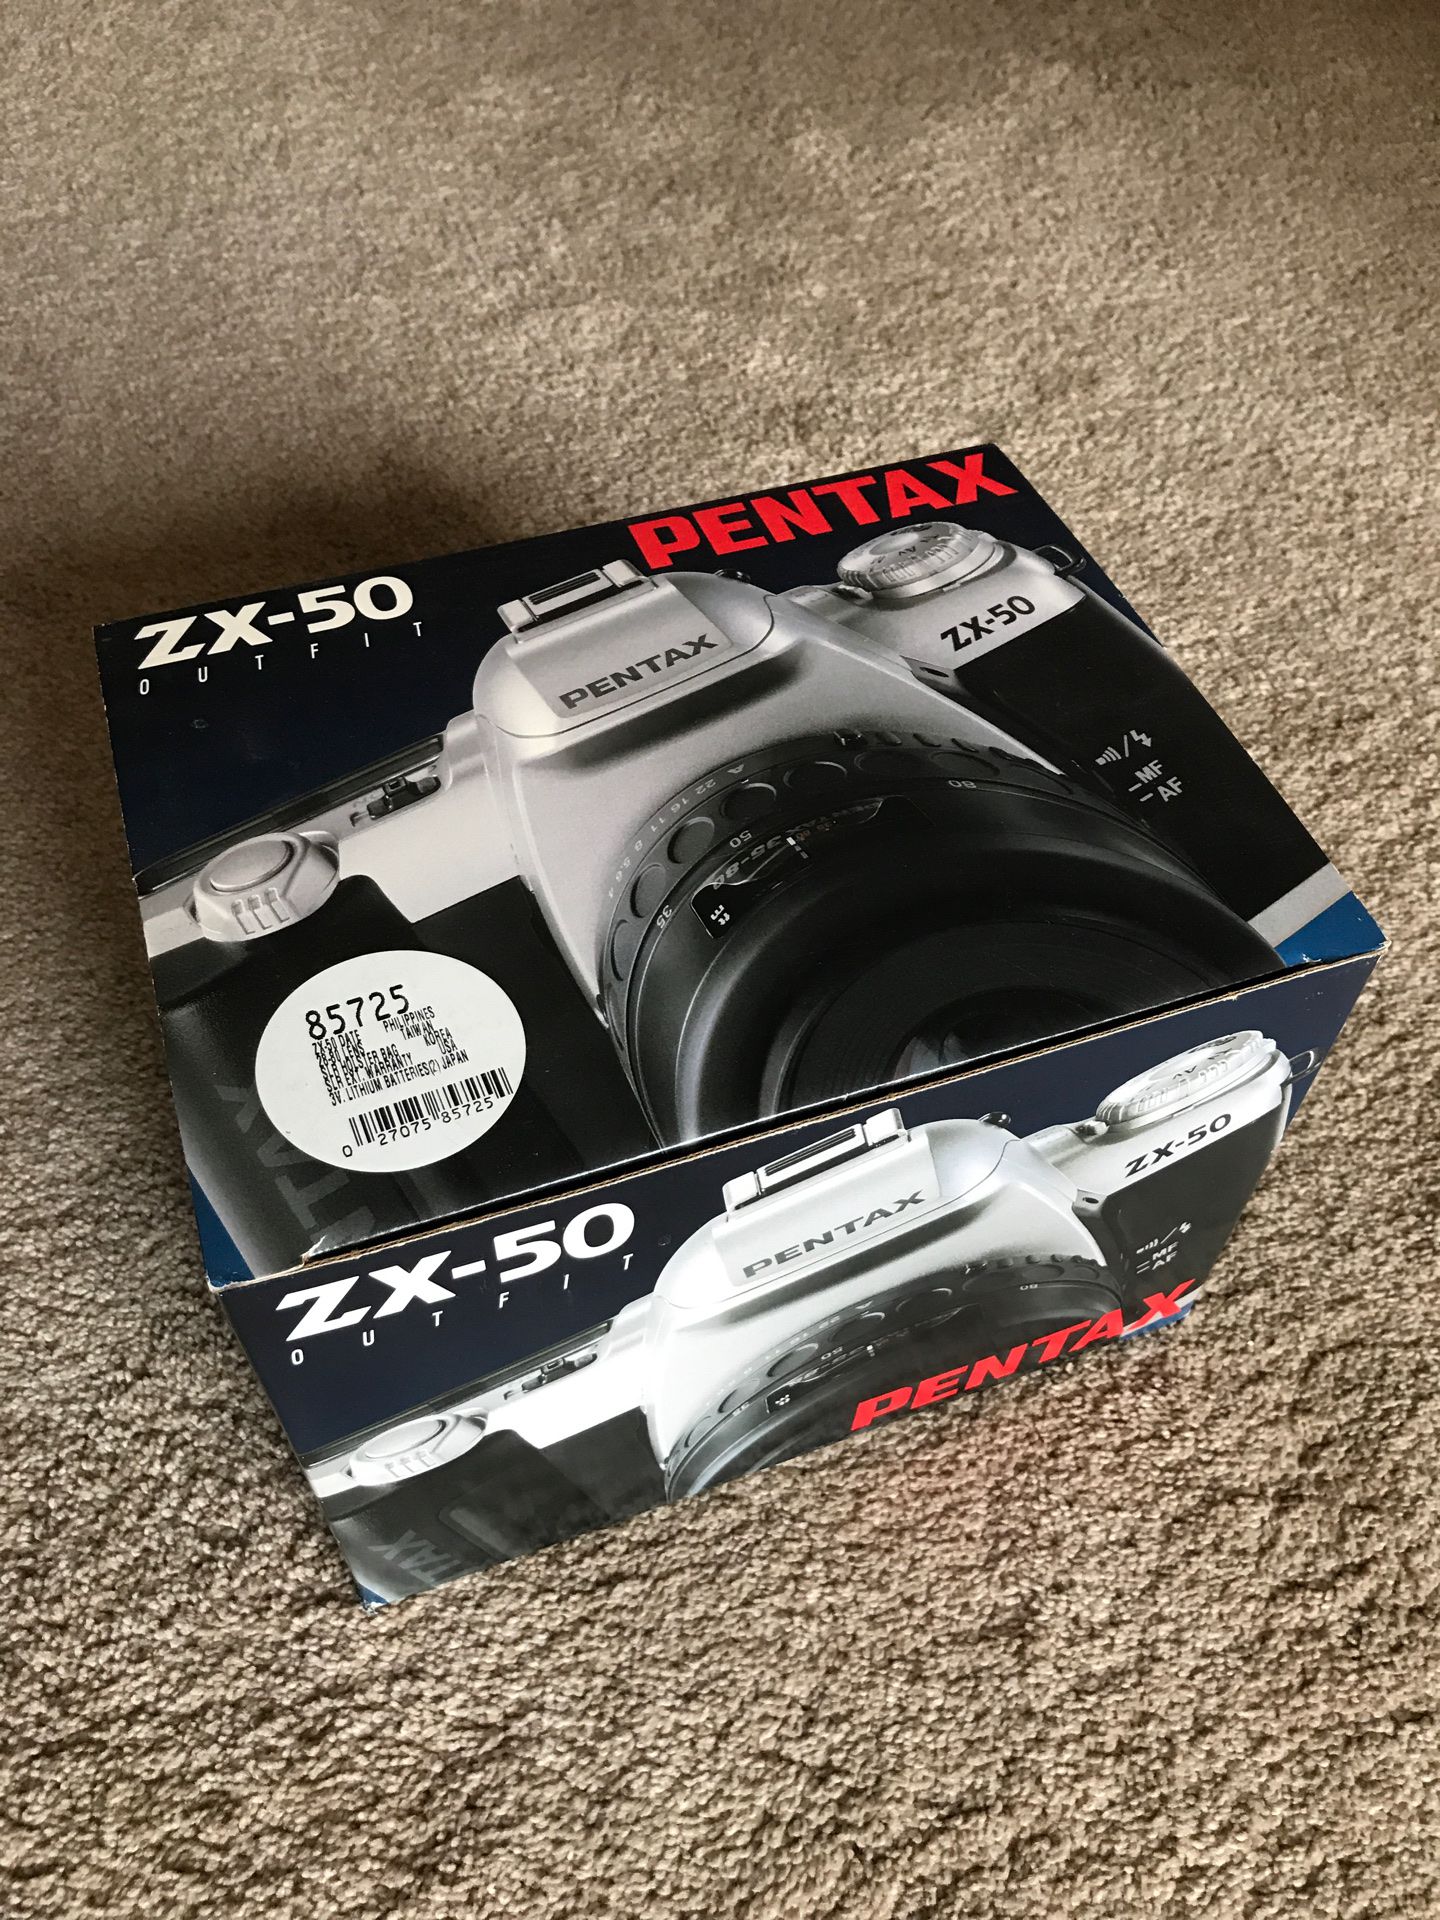 Pentax ZX-50 35mm Film SLR Camera